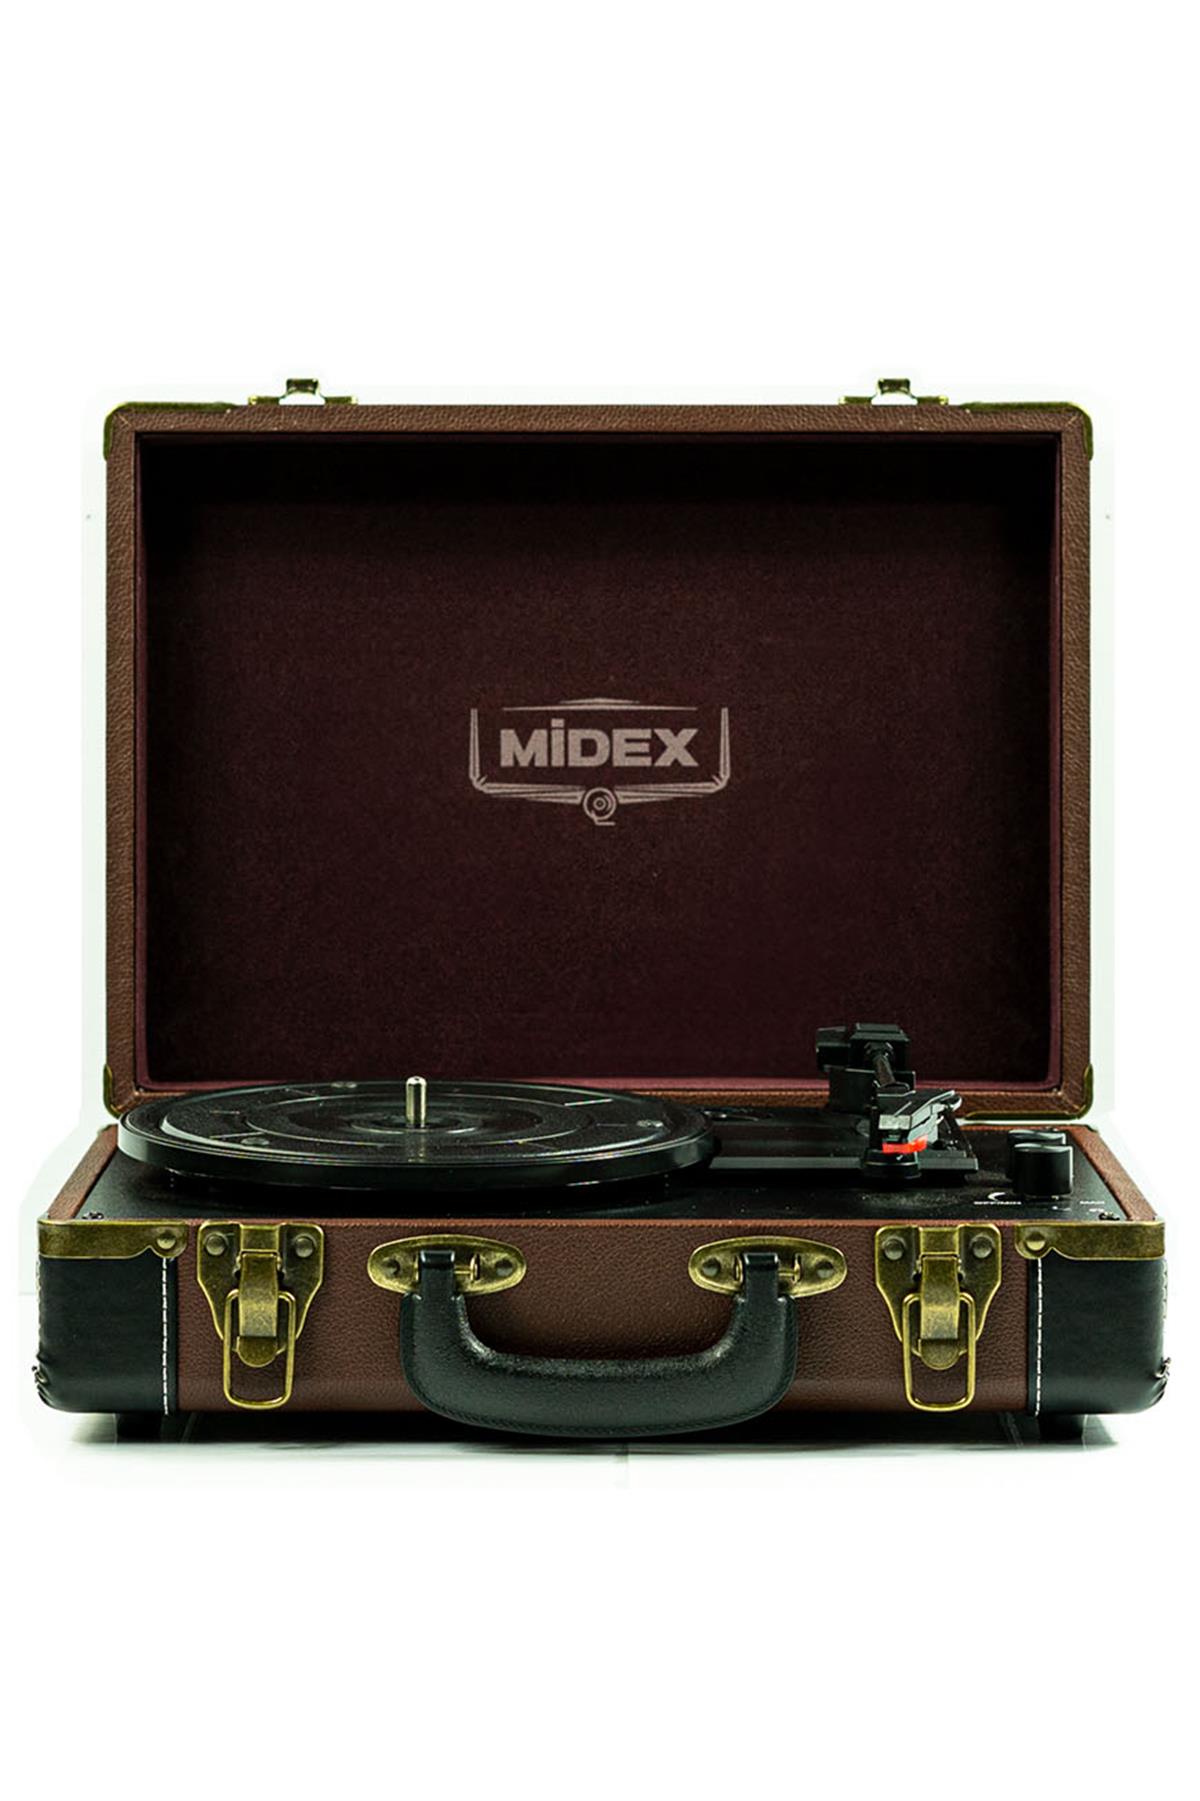 Midex Mtx-100 BN Nostaljik Retro Pikap Plak Çalar